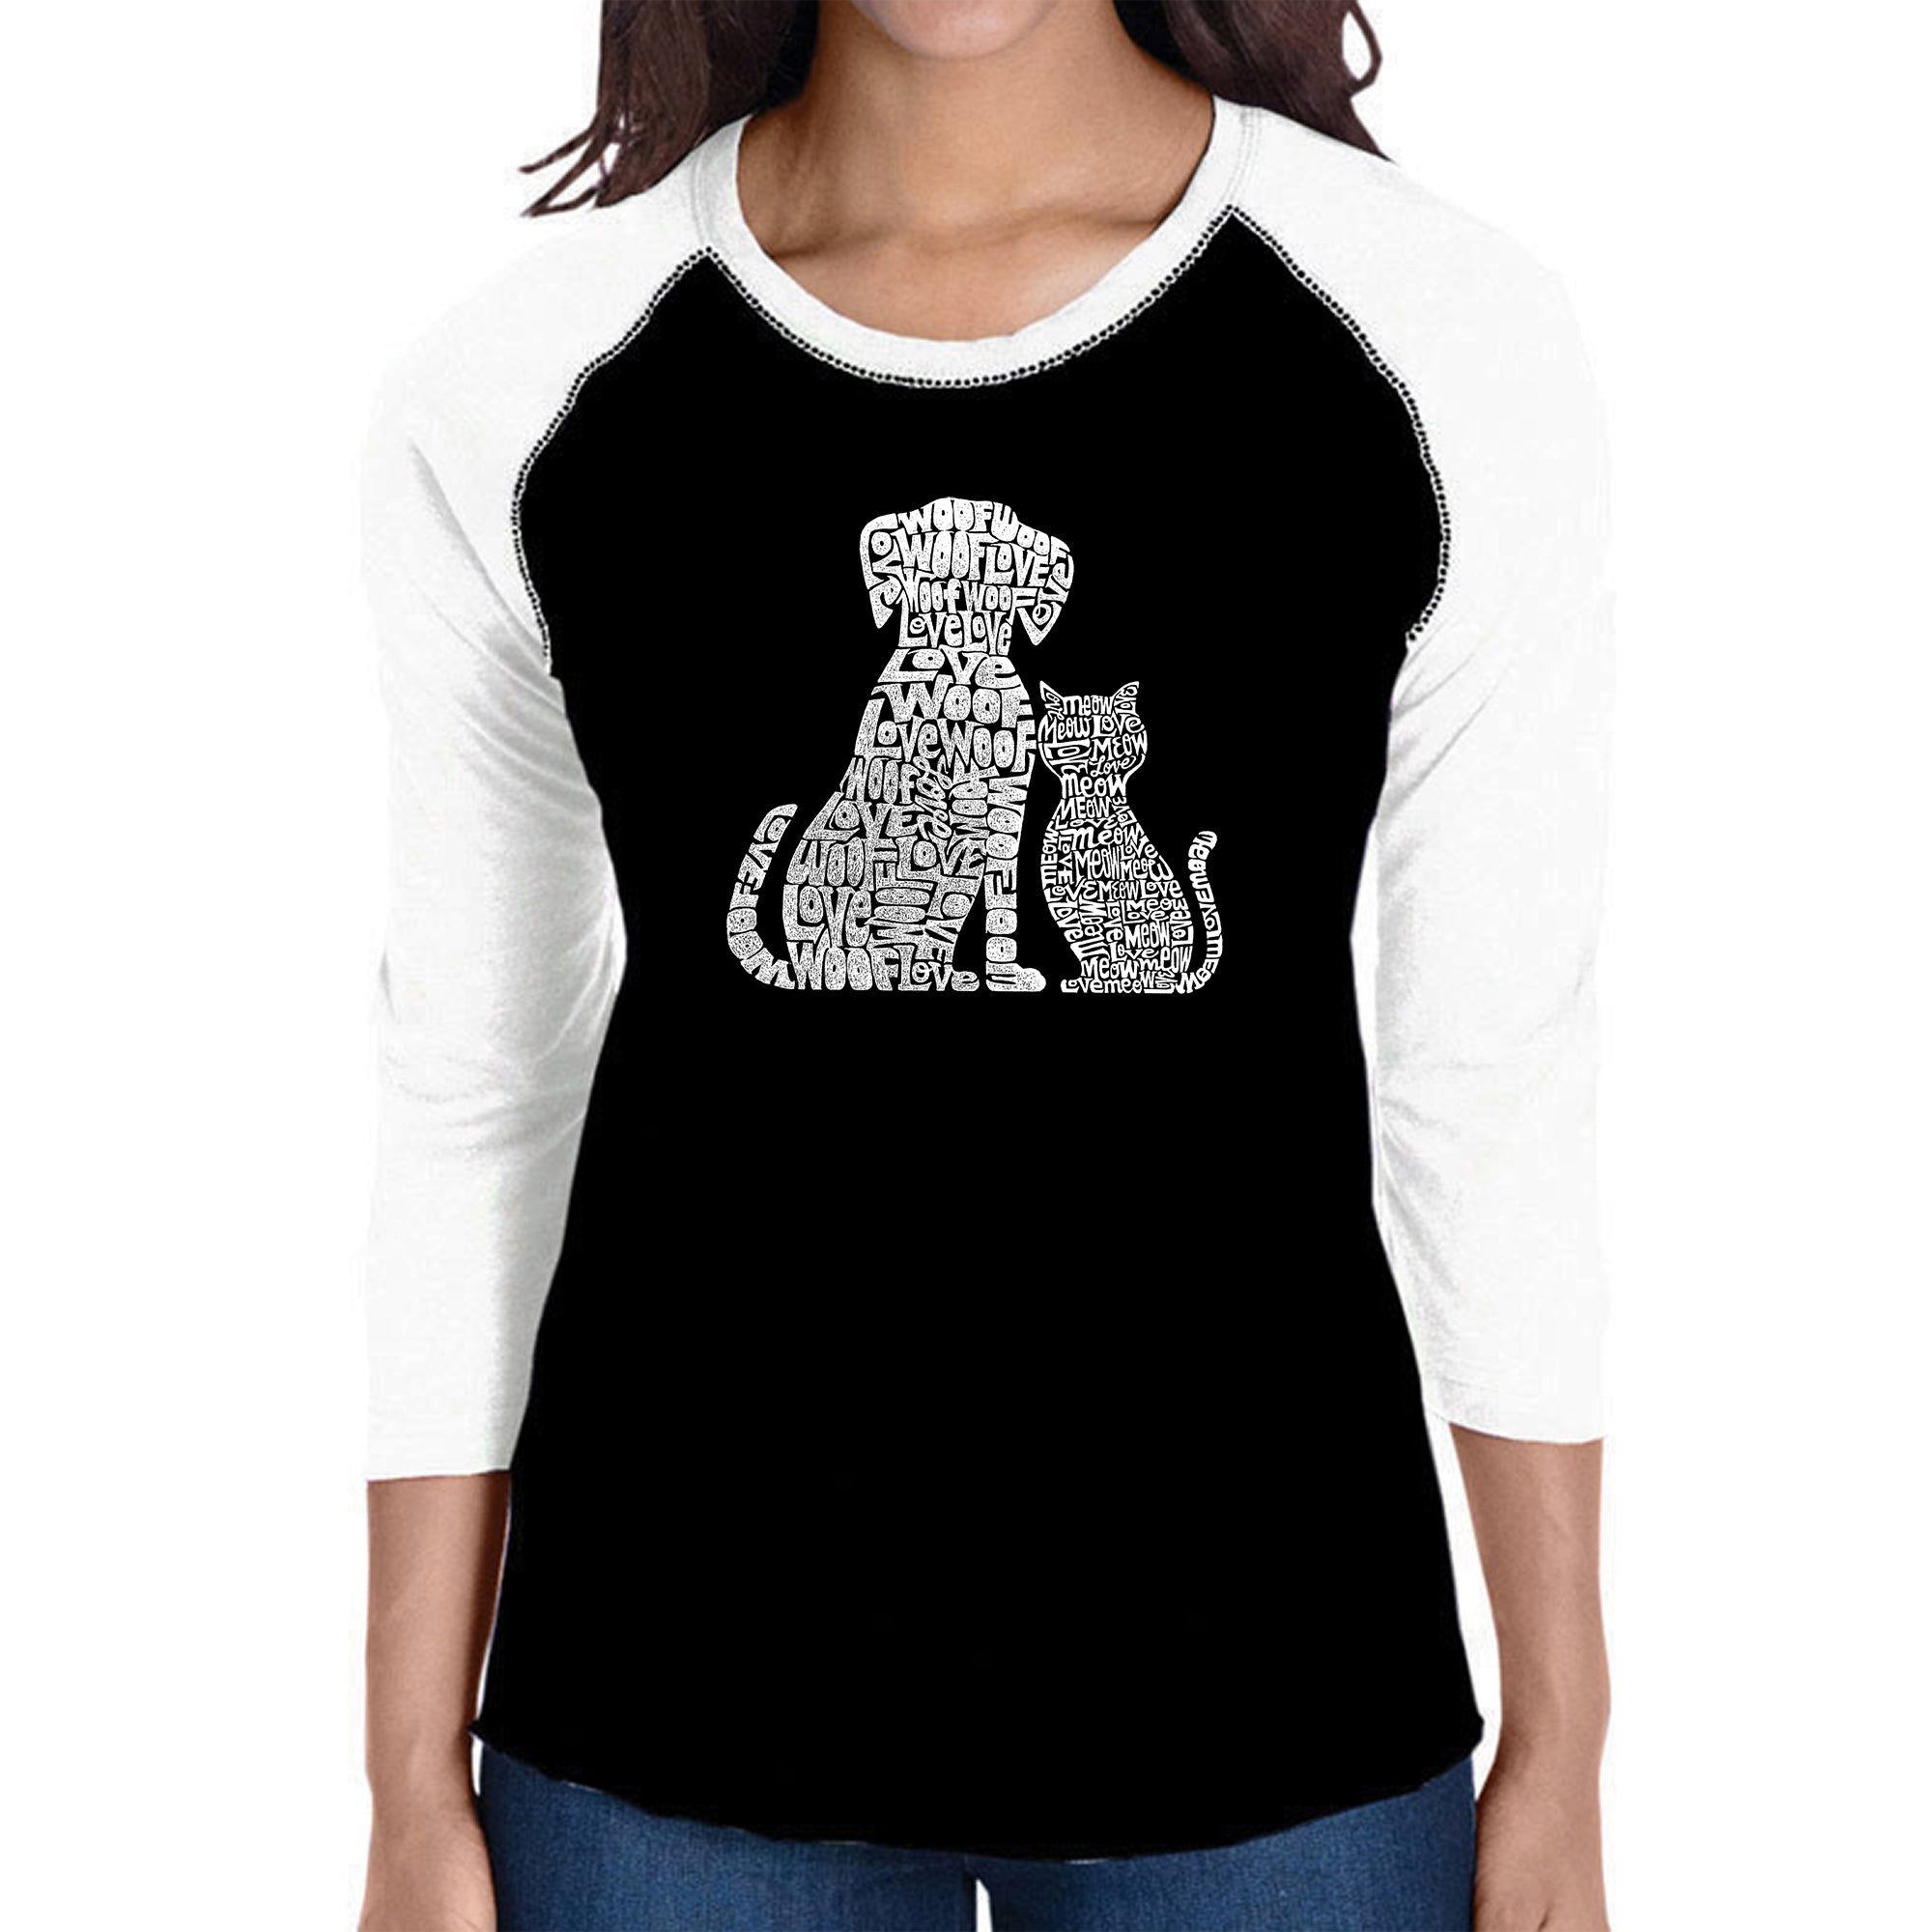 Dogs And Cats - Women's Raglan Baseball Word Art T-Shirt - Black/White - X-Large